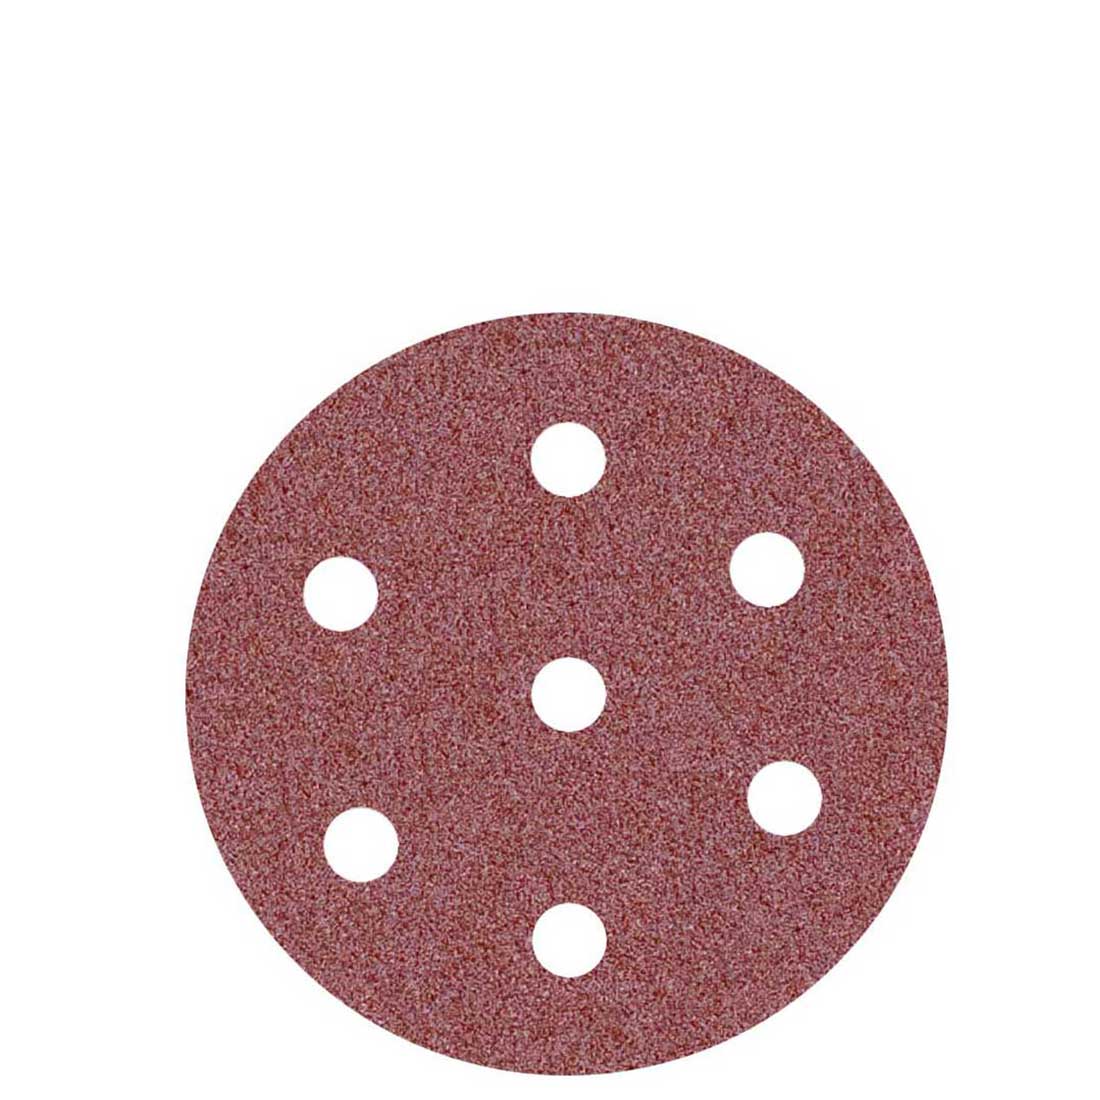 Dischi abrasivi velcrati MioTools per levigatrici rotorbitali, G24–240, Ø 90 mm / 7 fori / corindone normale